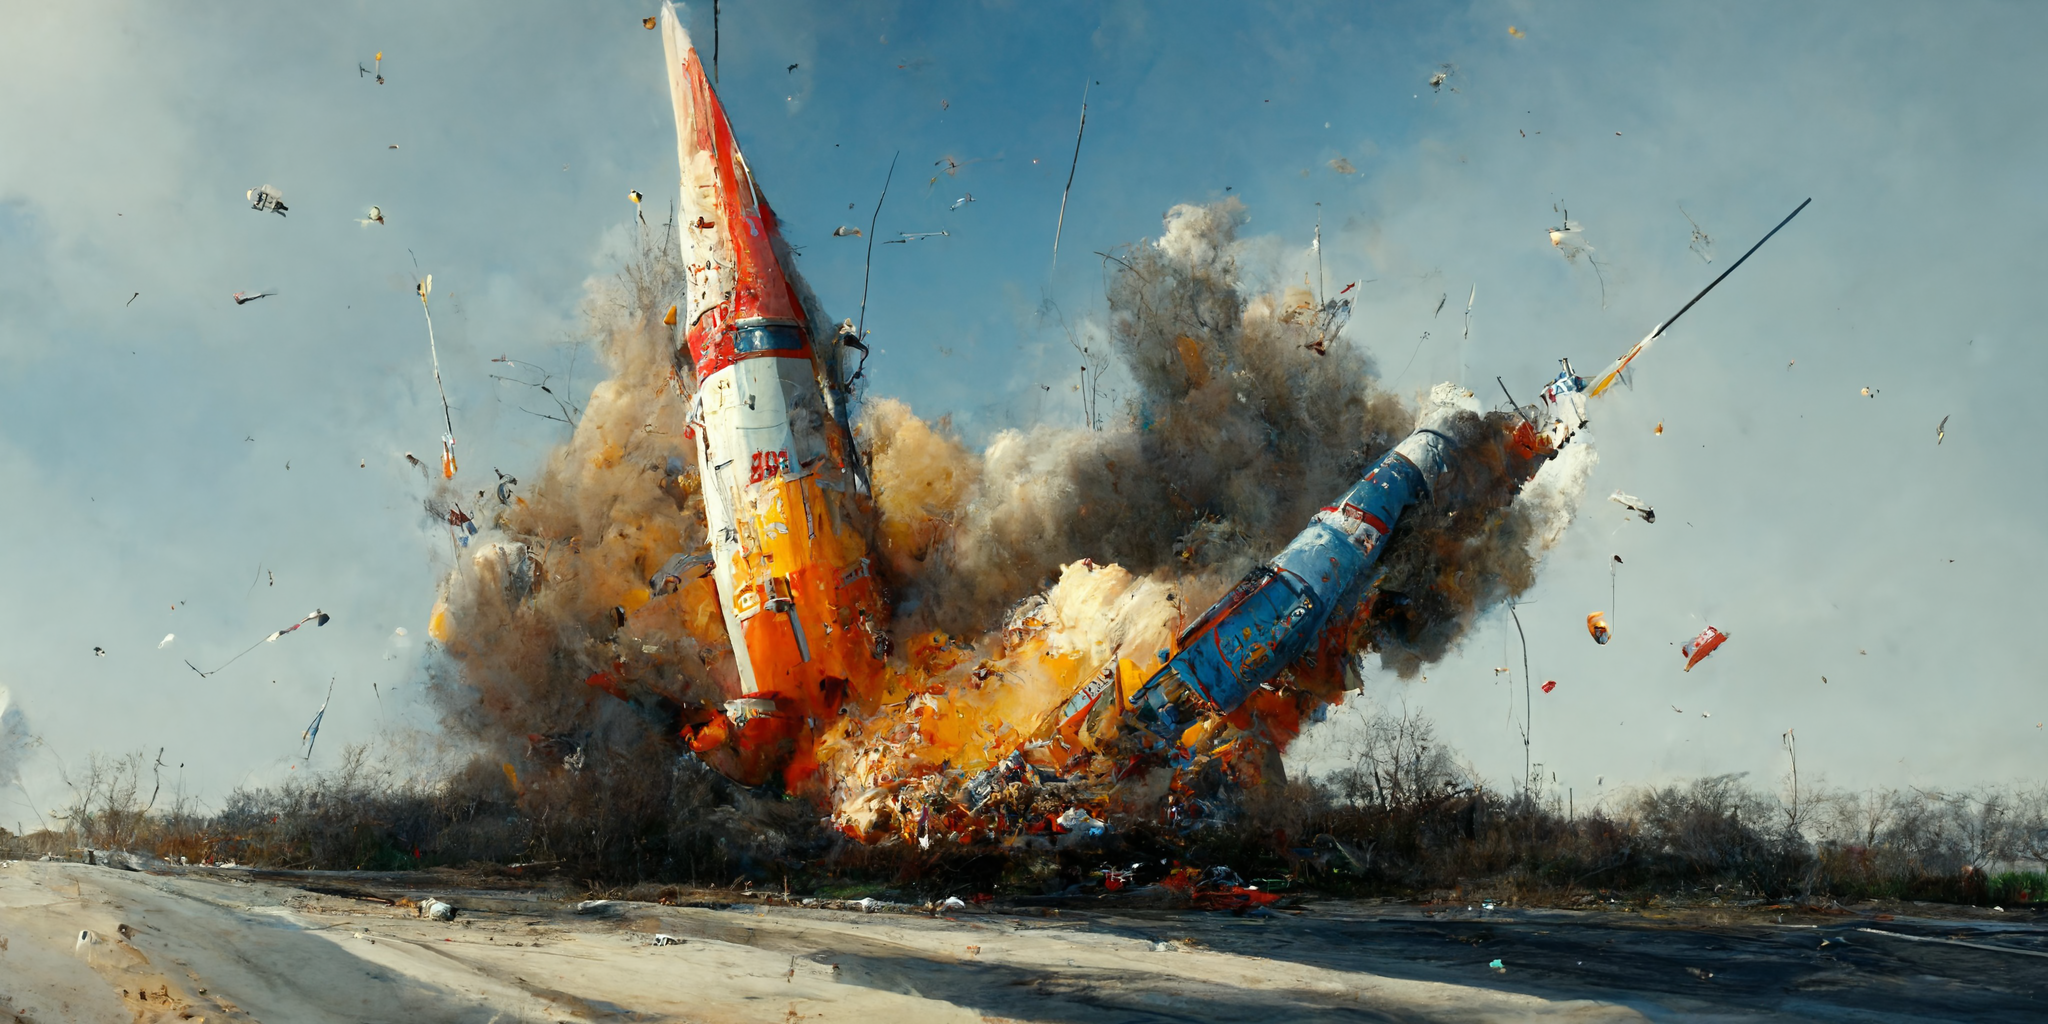 AI-generated image of a rocket crash